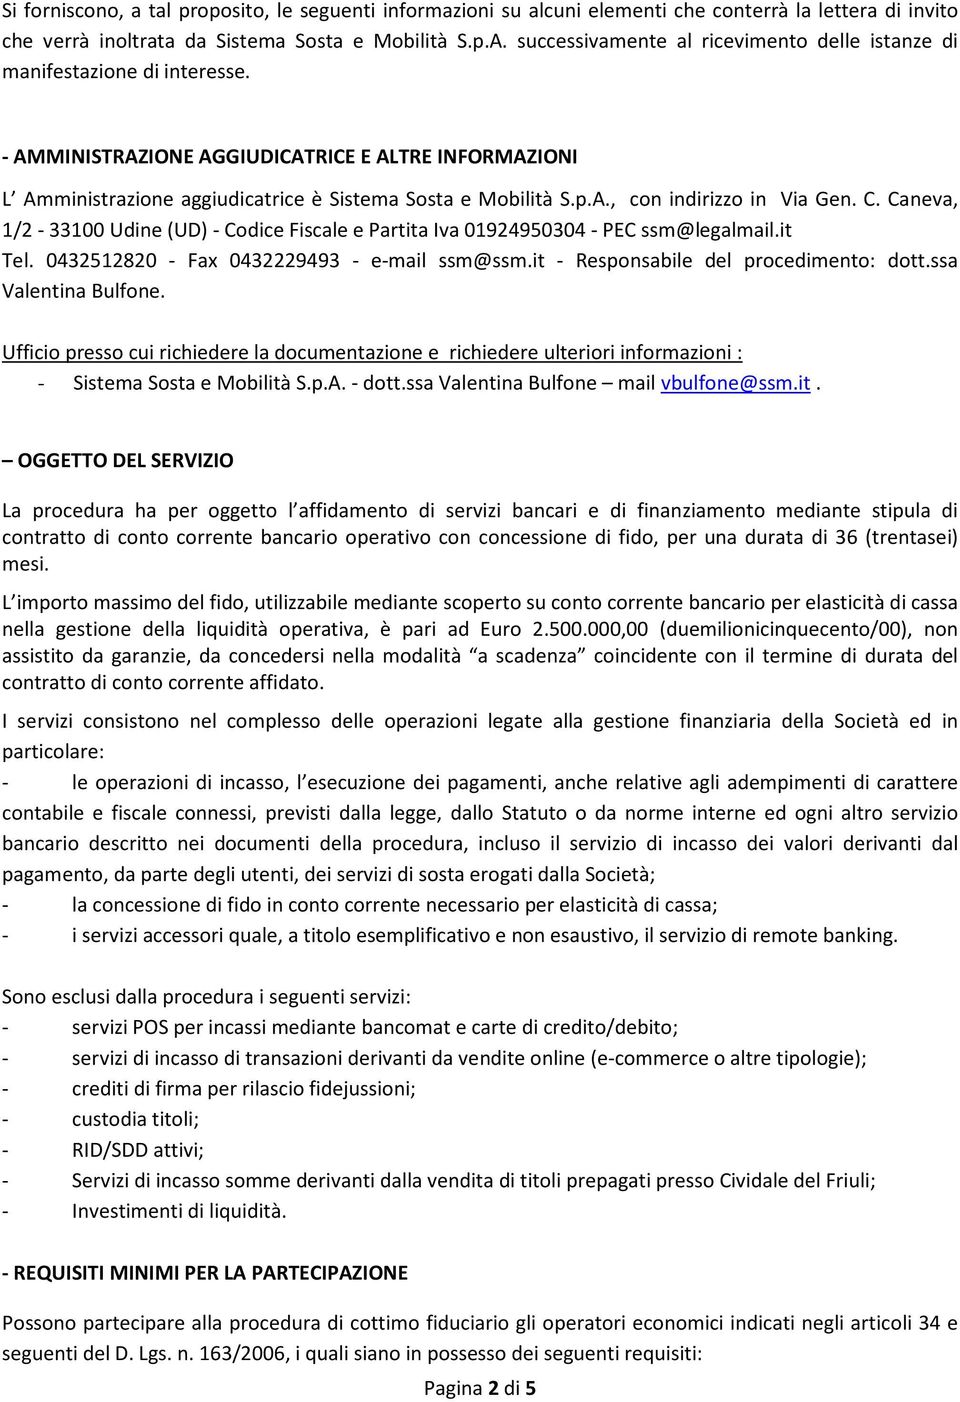 C. Caneva, 1/2-33100 Udine (UD) - Codice Fiscale e Partita Iva 01924950304 - PEC ssm@legalmail.it Tel. 0432512820 - Fax 0432229493 - e-mail ssm@ssm.it - Responsabile del procedimento: dott.